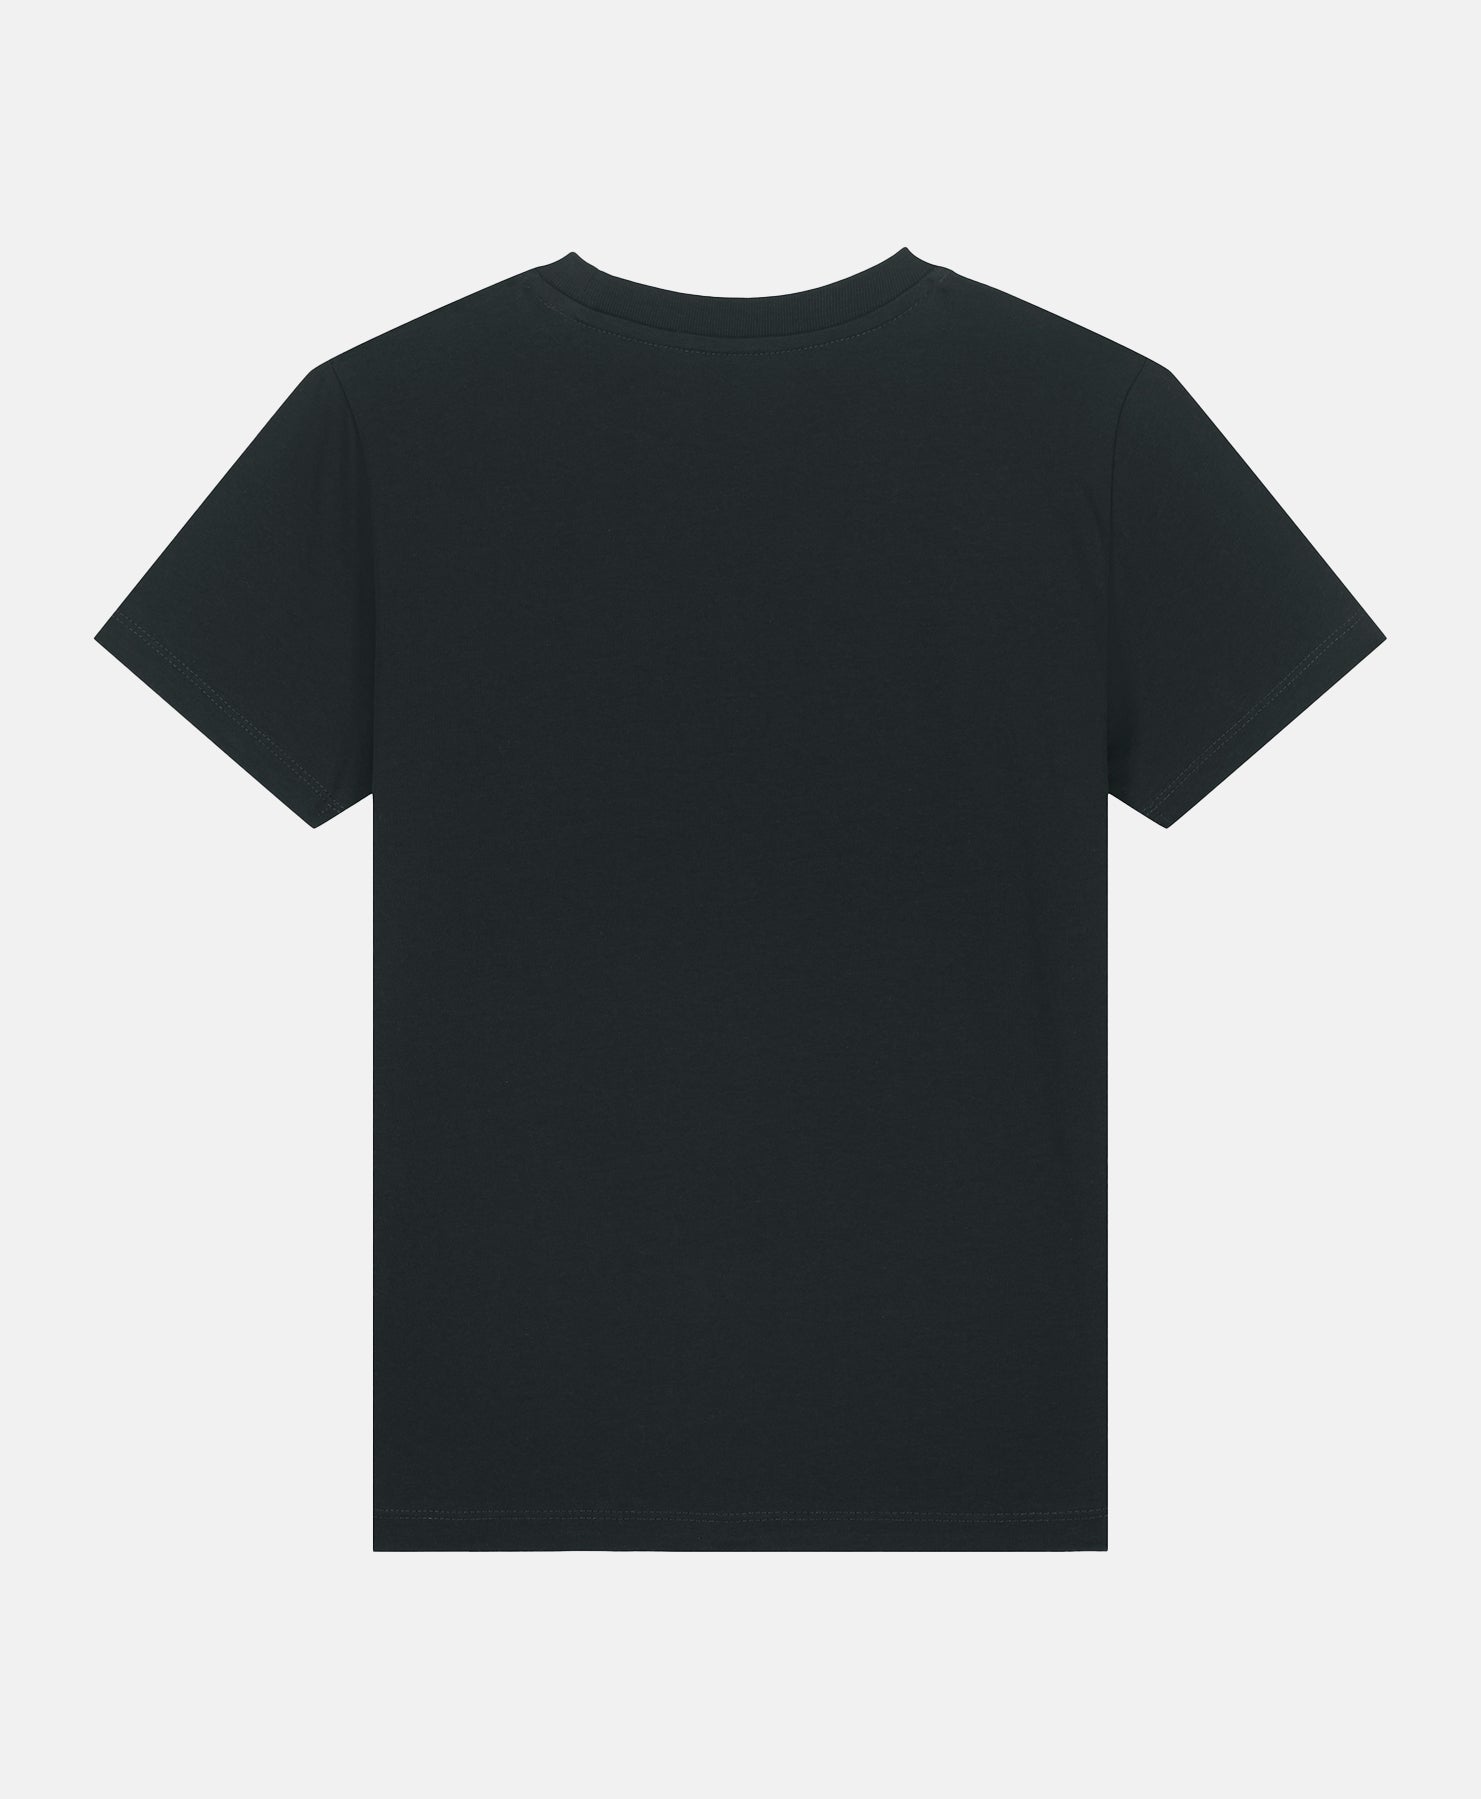 Labrador T-Shirt Kids Black